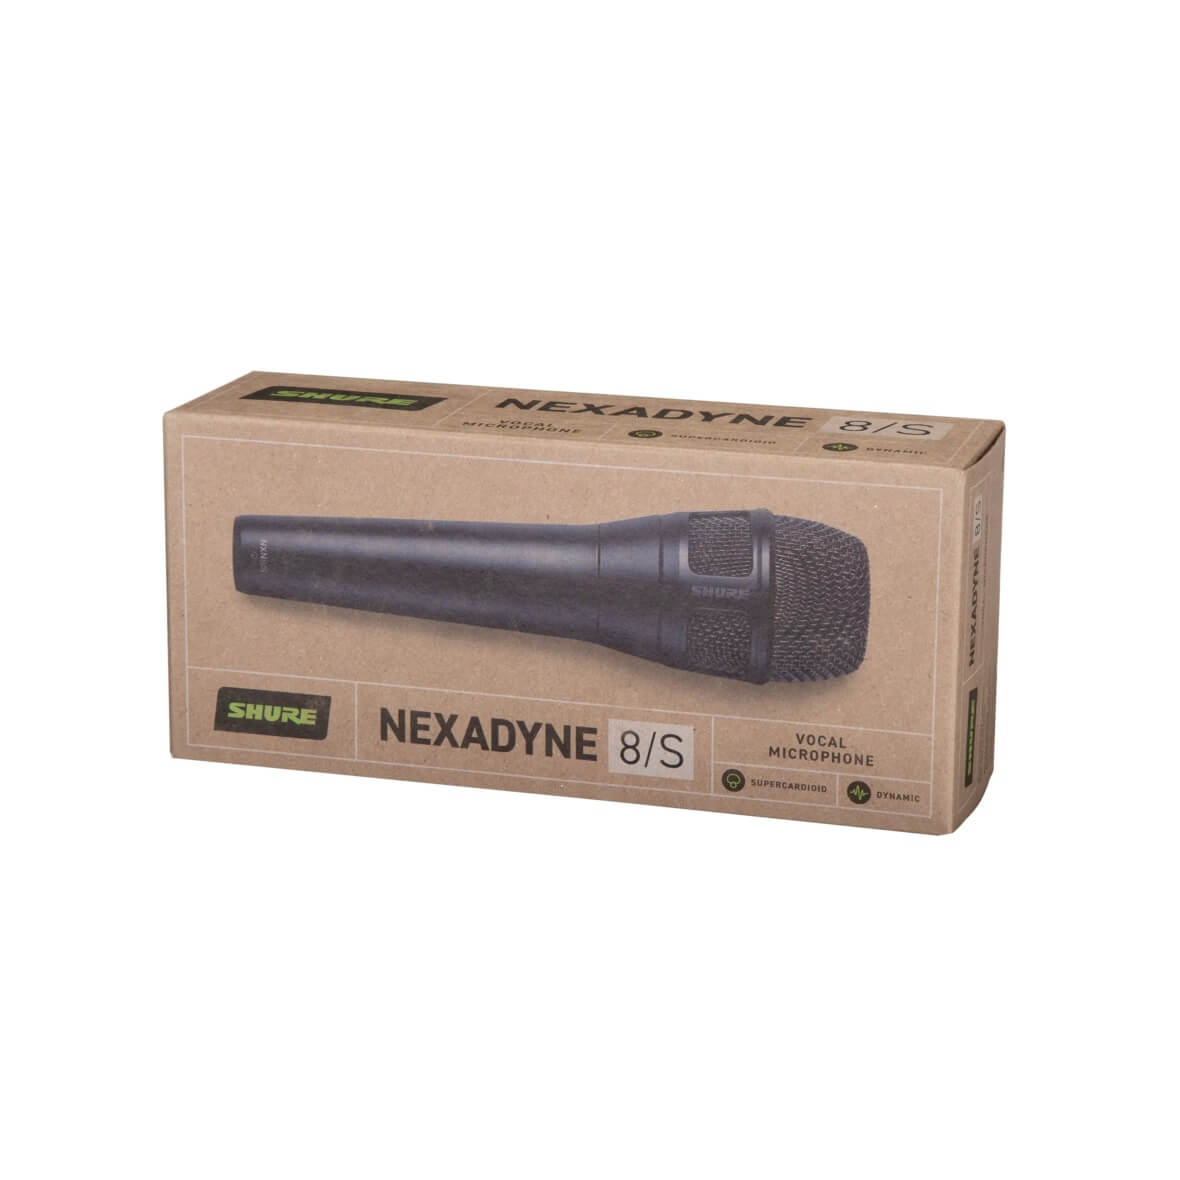 Shure Nexadyne 8/S - Supercardioid Dynamic Vocal Microphone, box